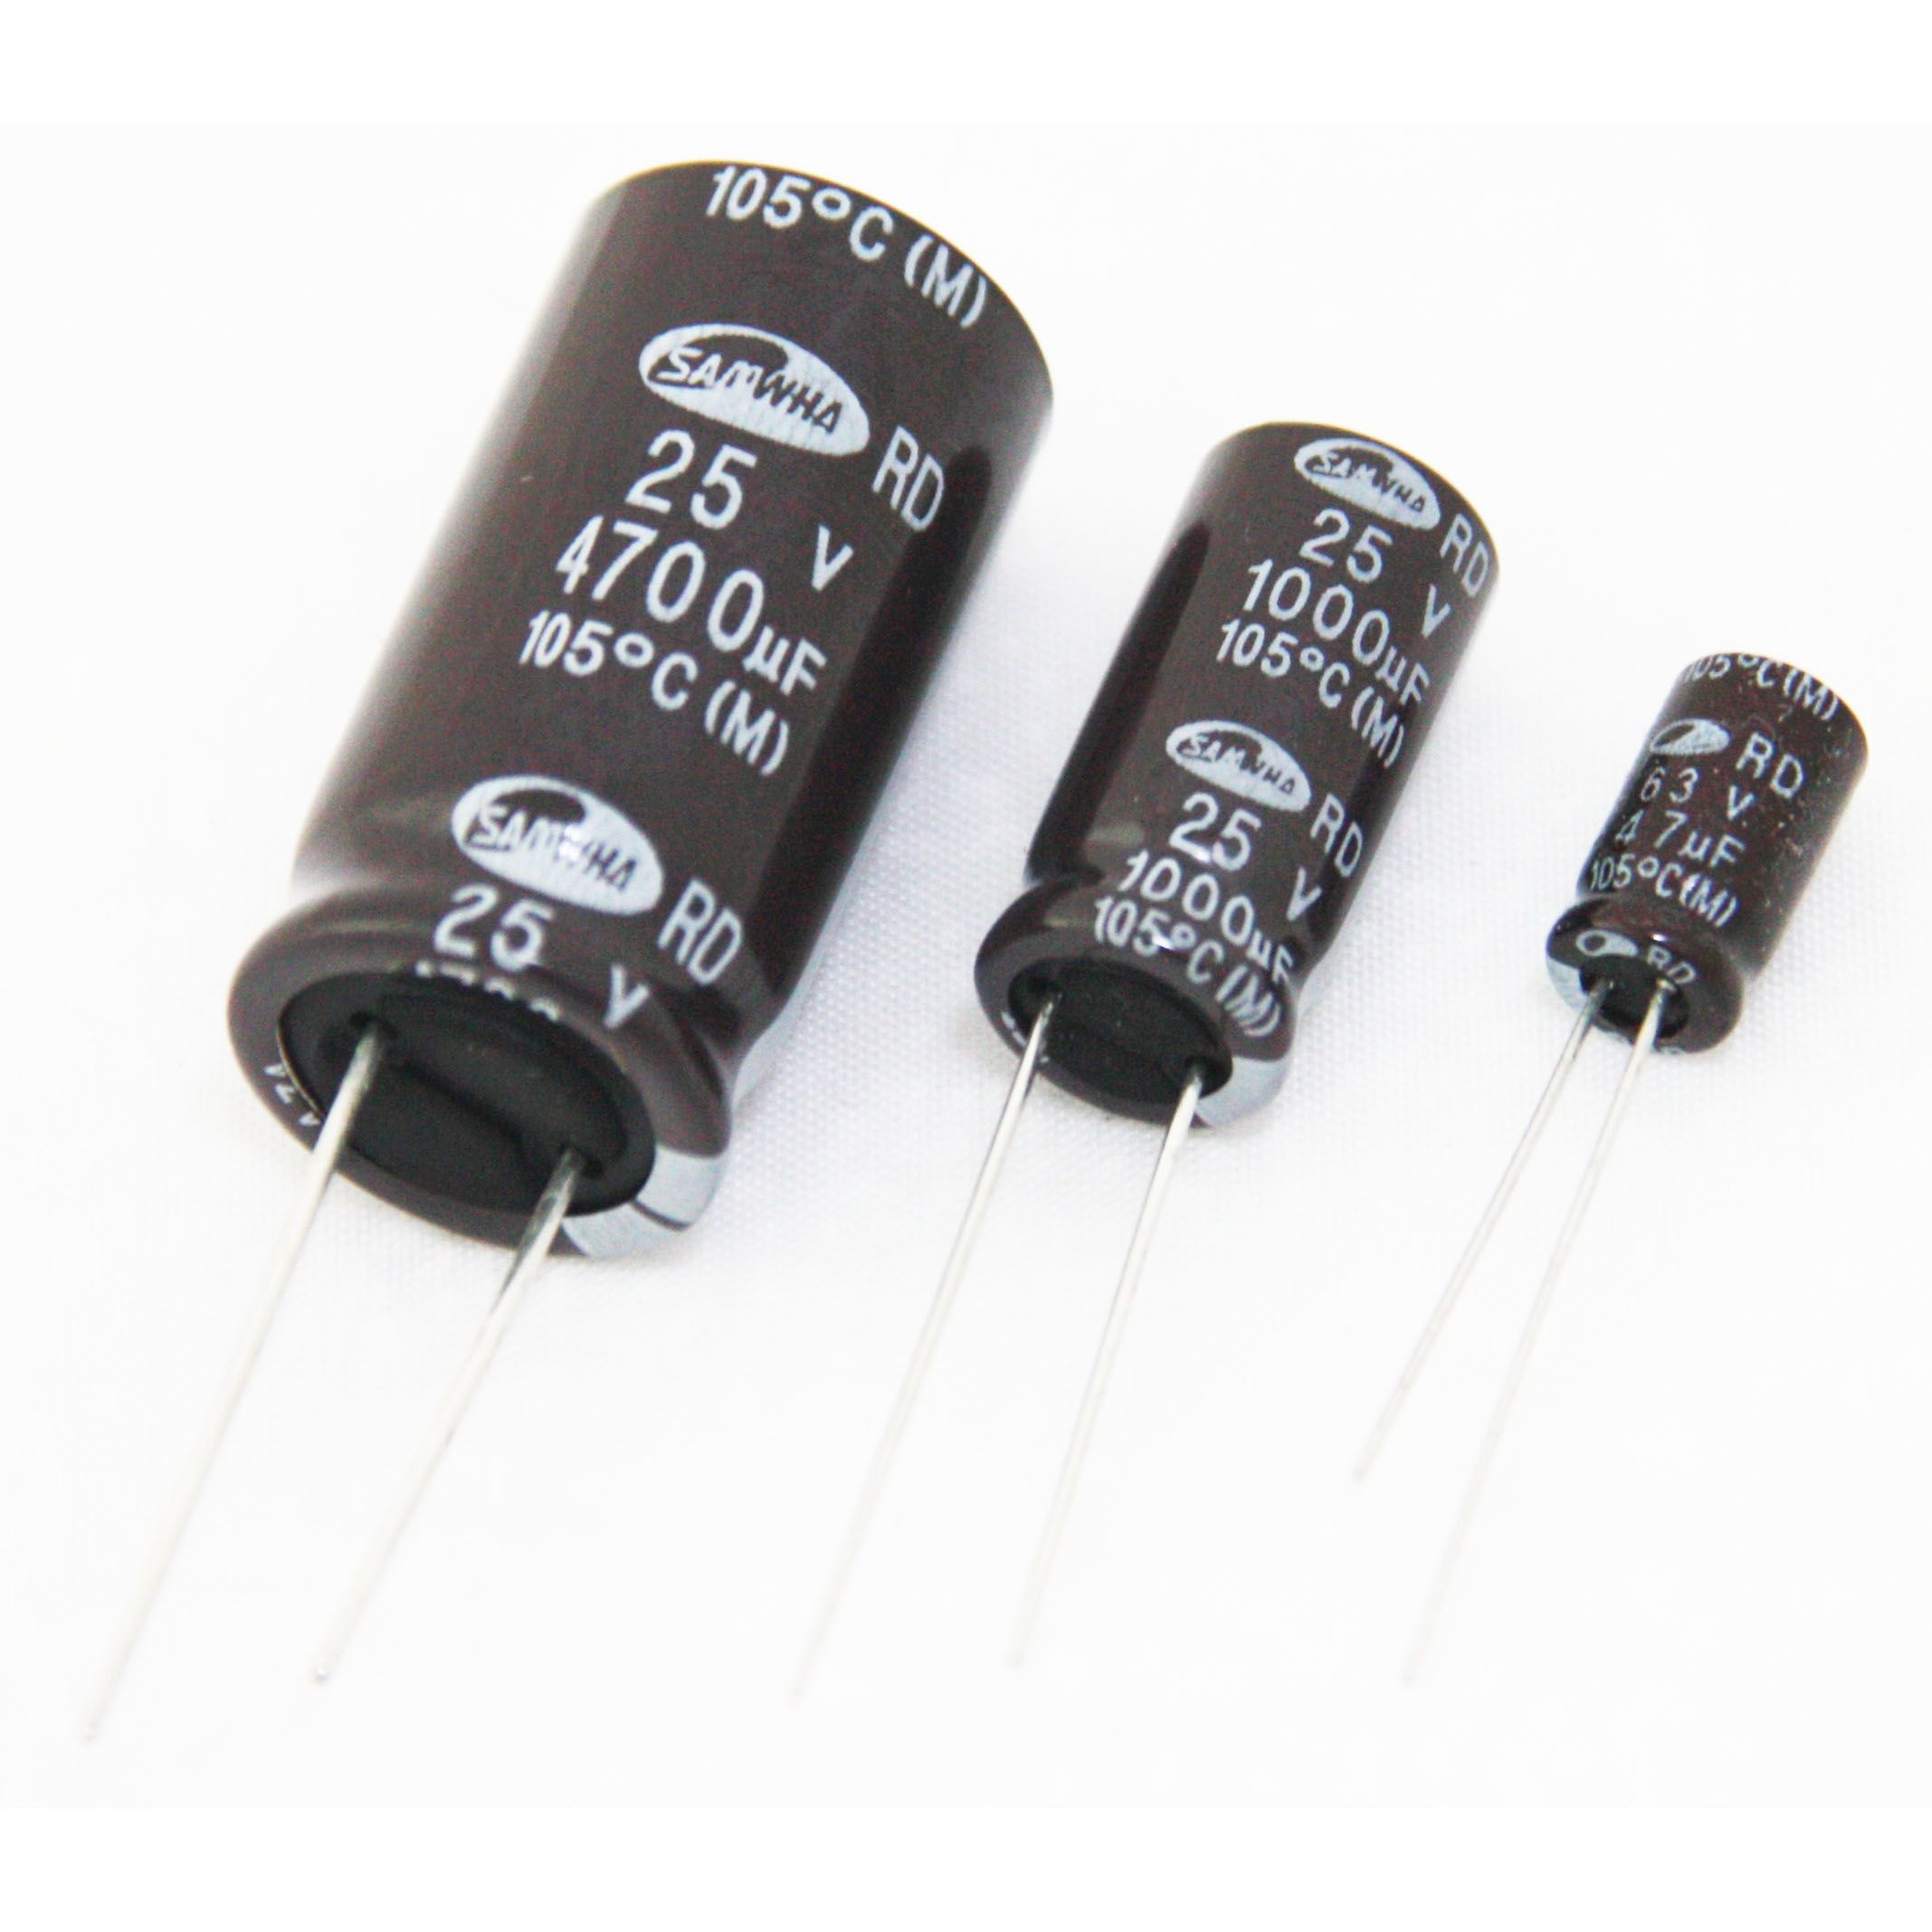 Electrolytic capacitor 105° 4700uF-6,3V